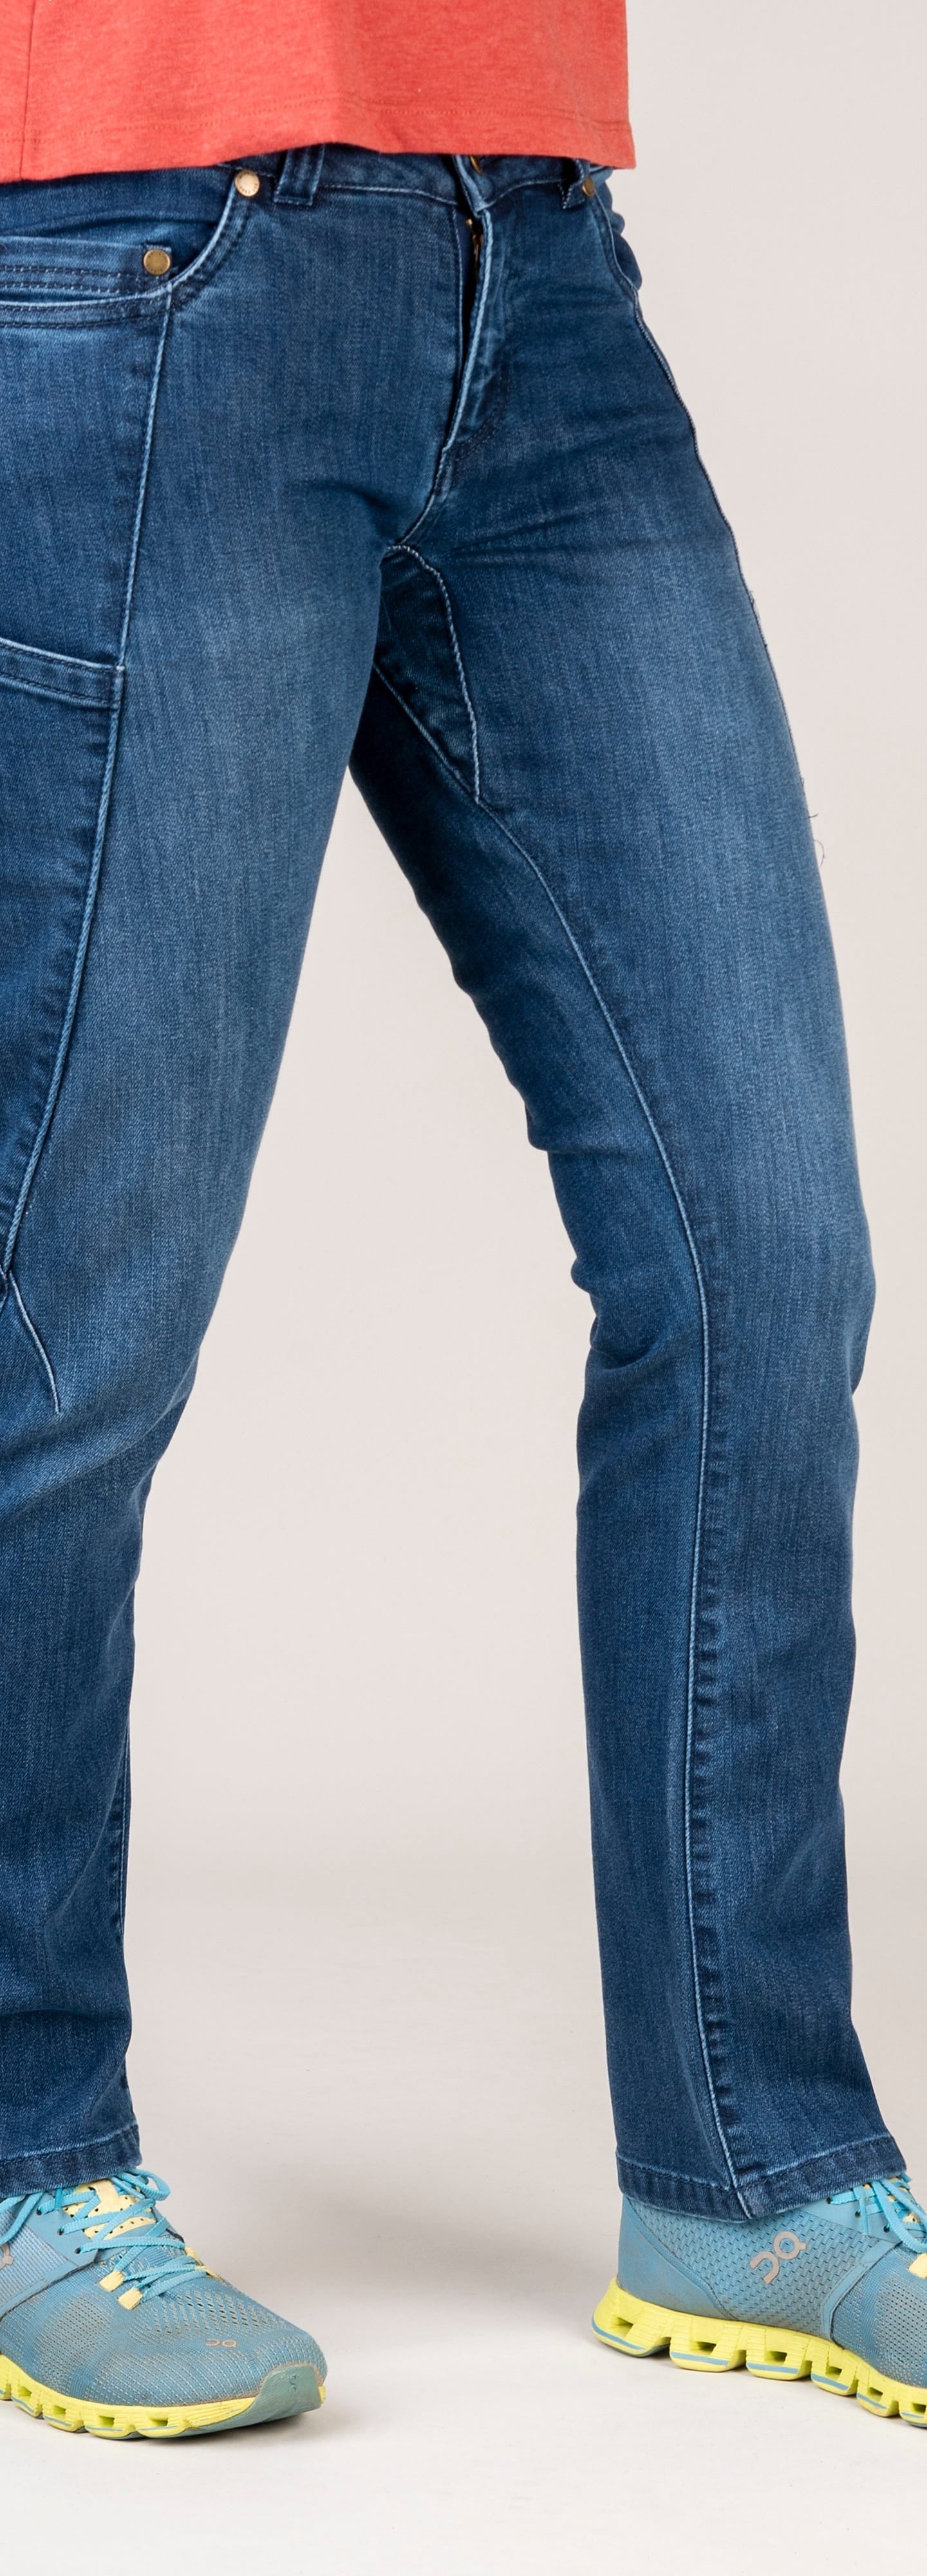 Express Jeans Size 4 - Gem